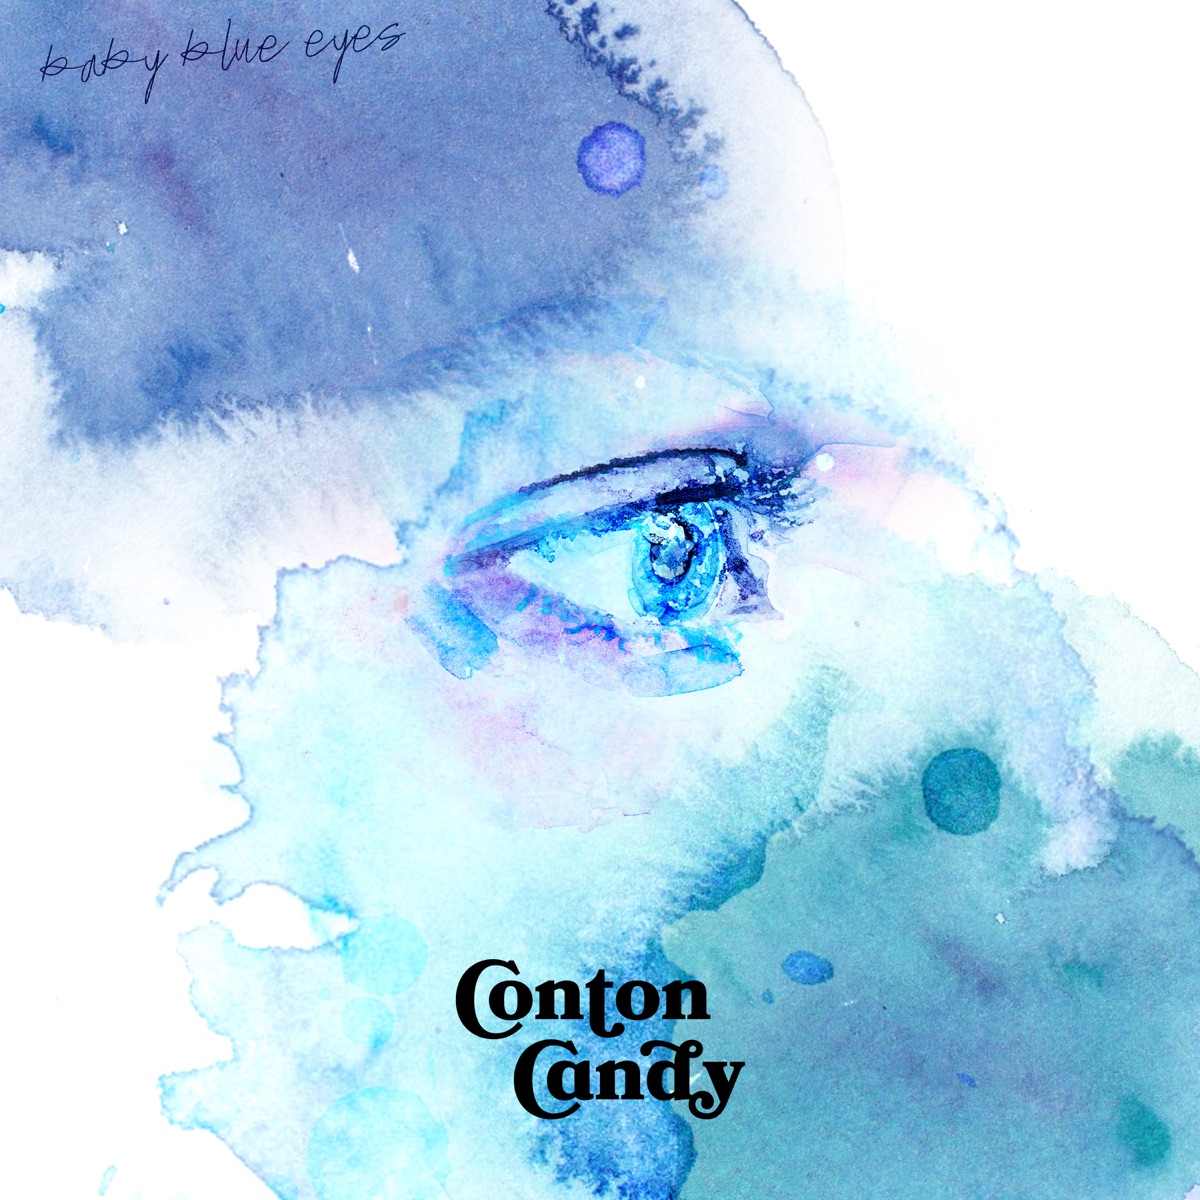 『Conton Candy - baby blue eyes』収録の『baby blue eyes』ジャケット